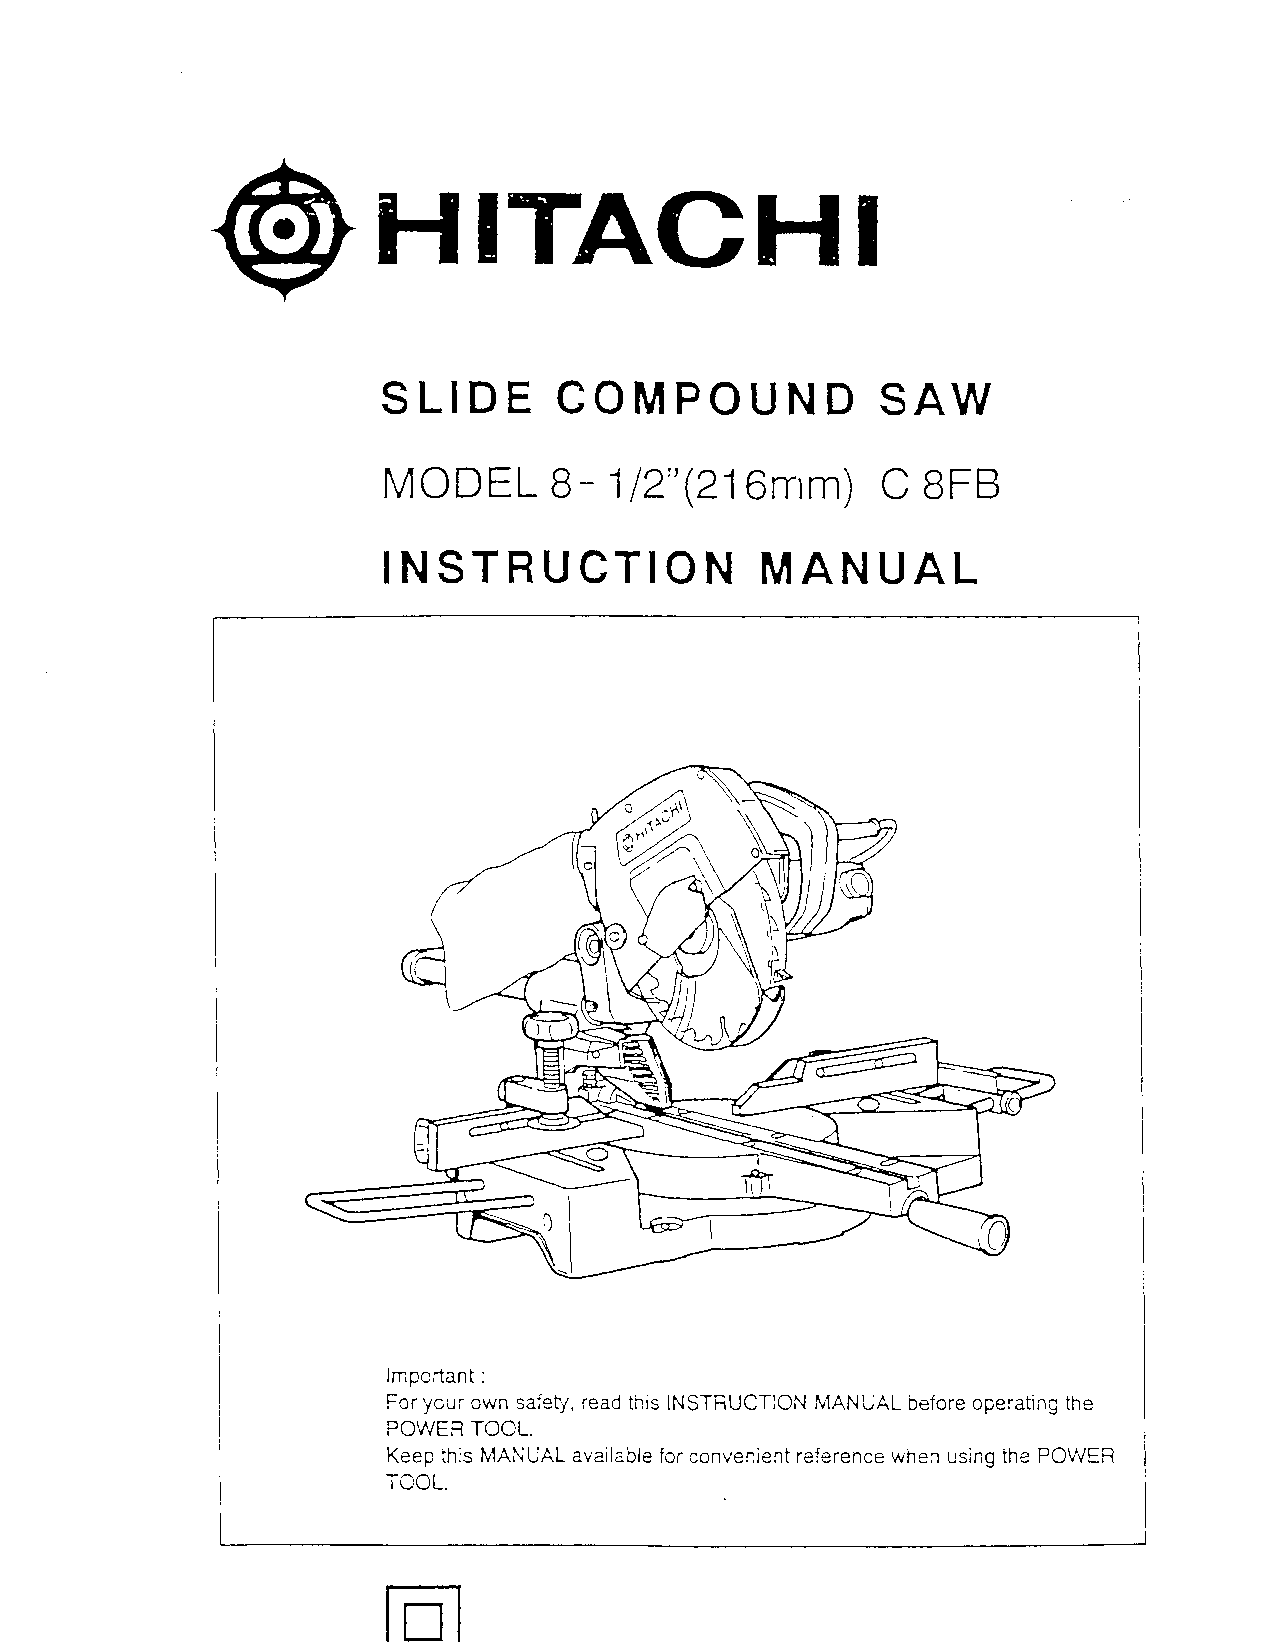 Hitachi C8FB User Manual